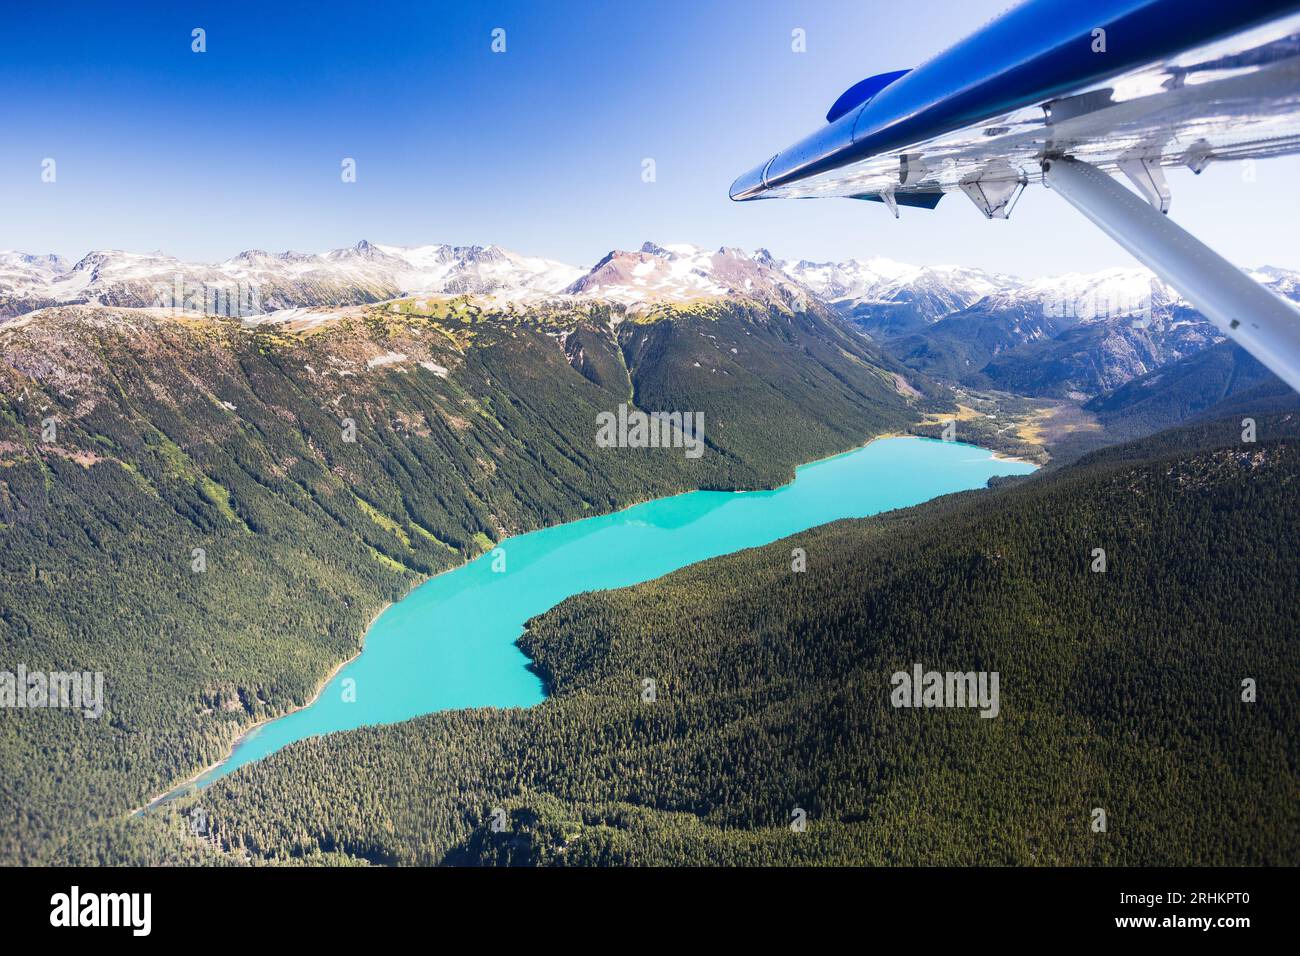 Fotografía aérea del lago Cheakamus azul turquesa cristalino en verano Garibaldi Park Whistler, Columbia Británica destino turístico aventura Foto de stock